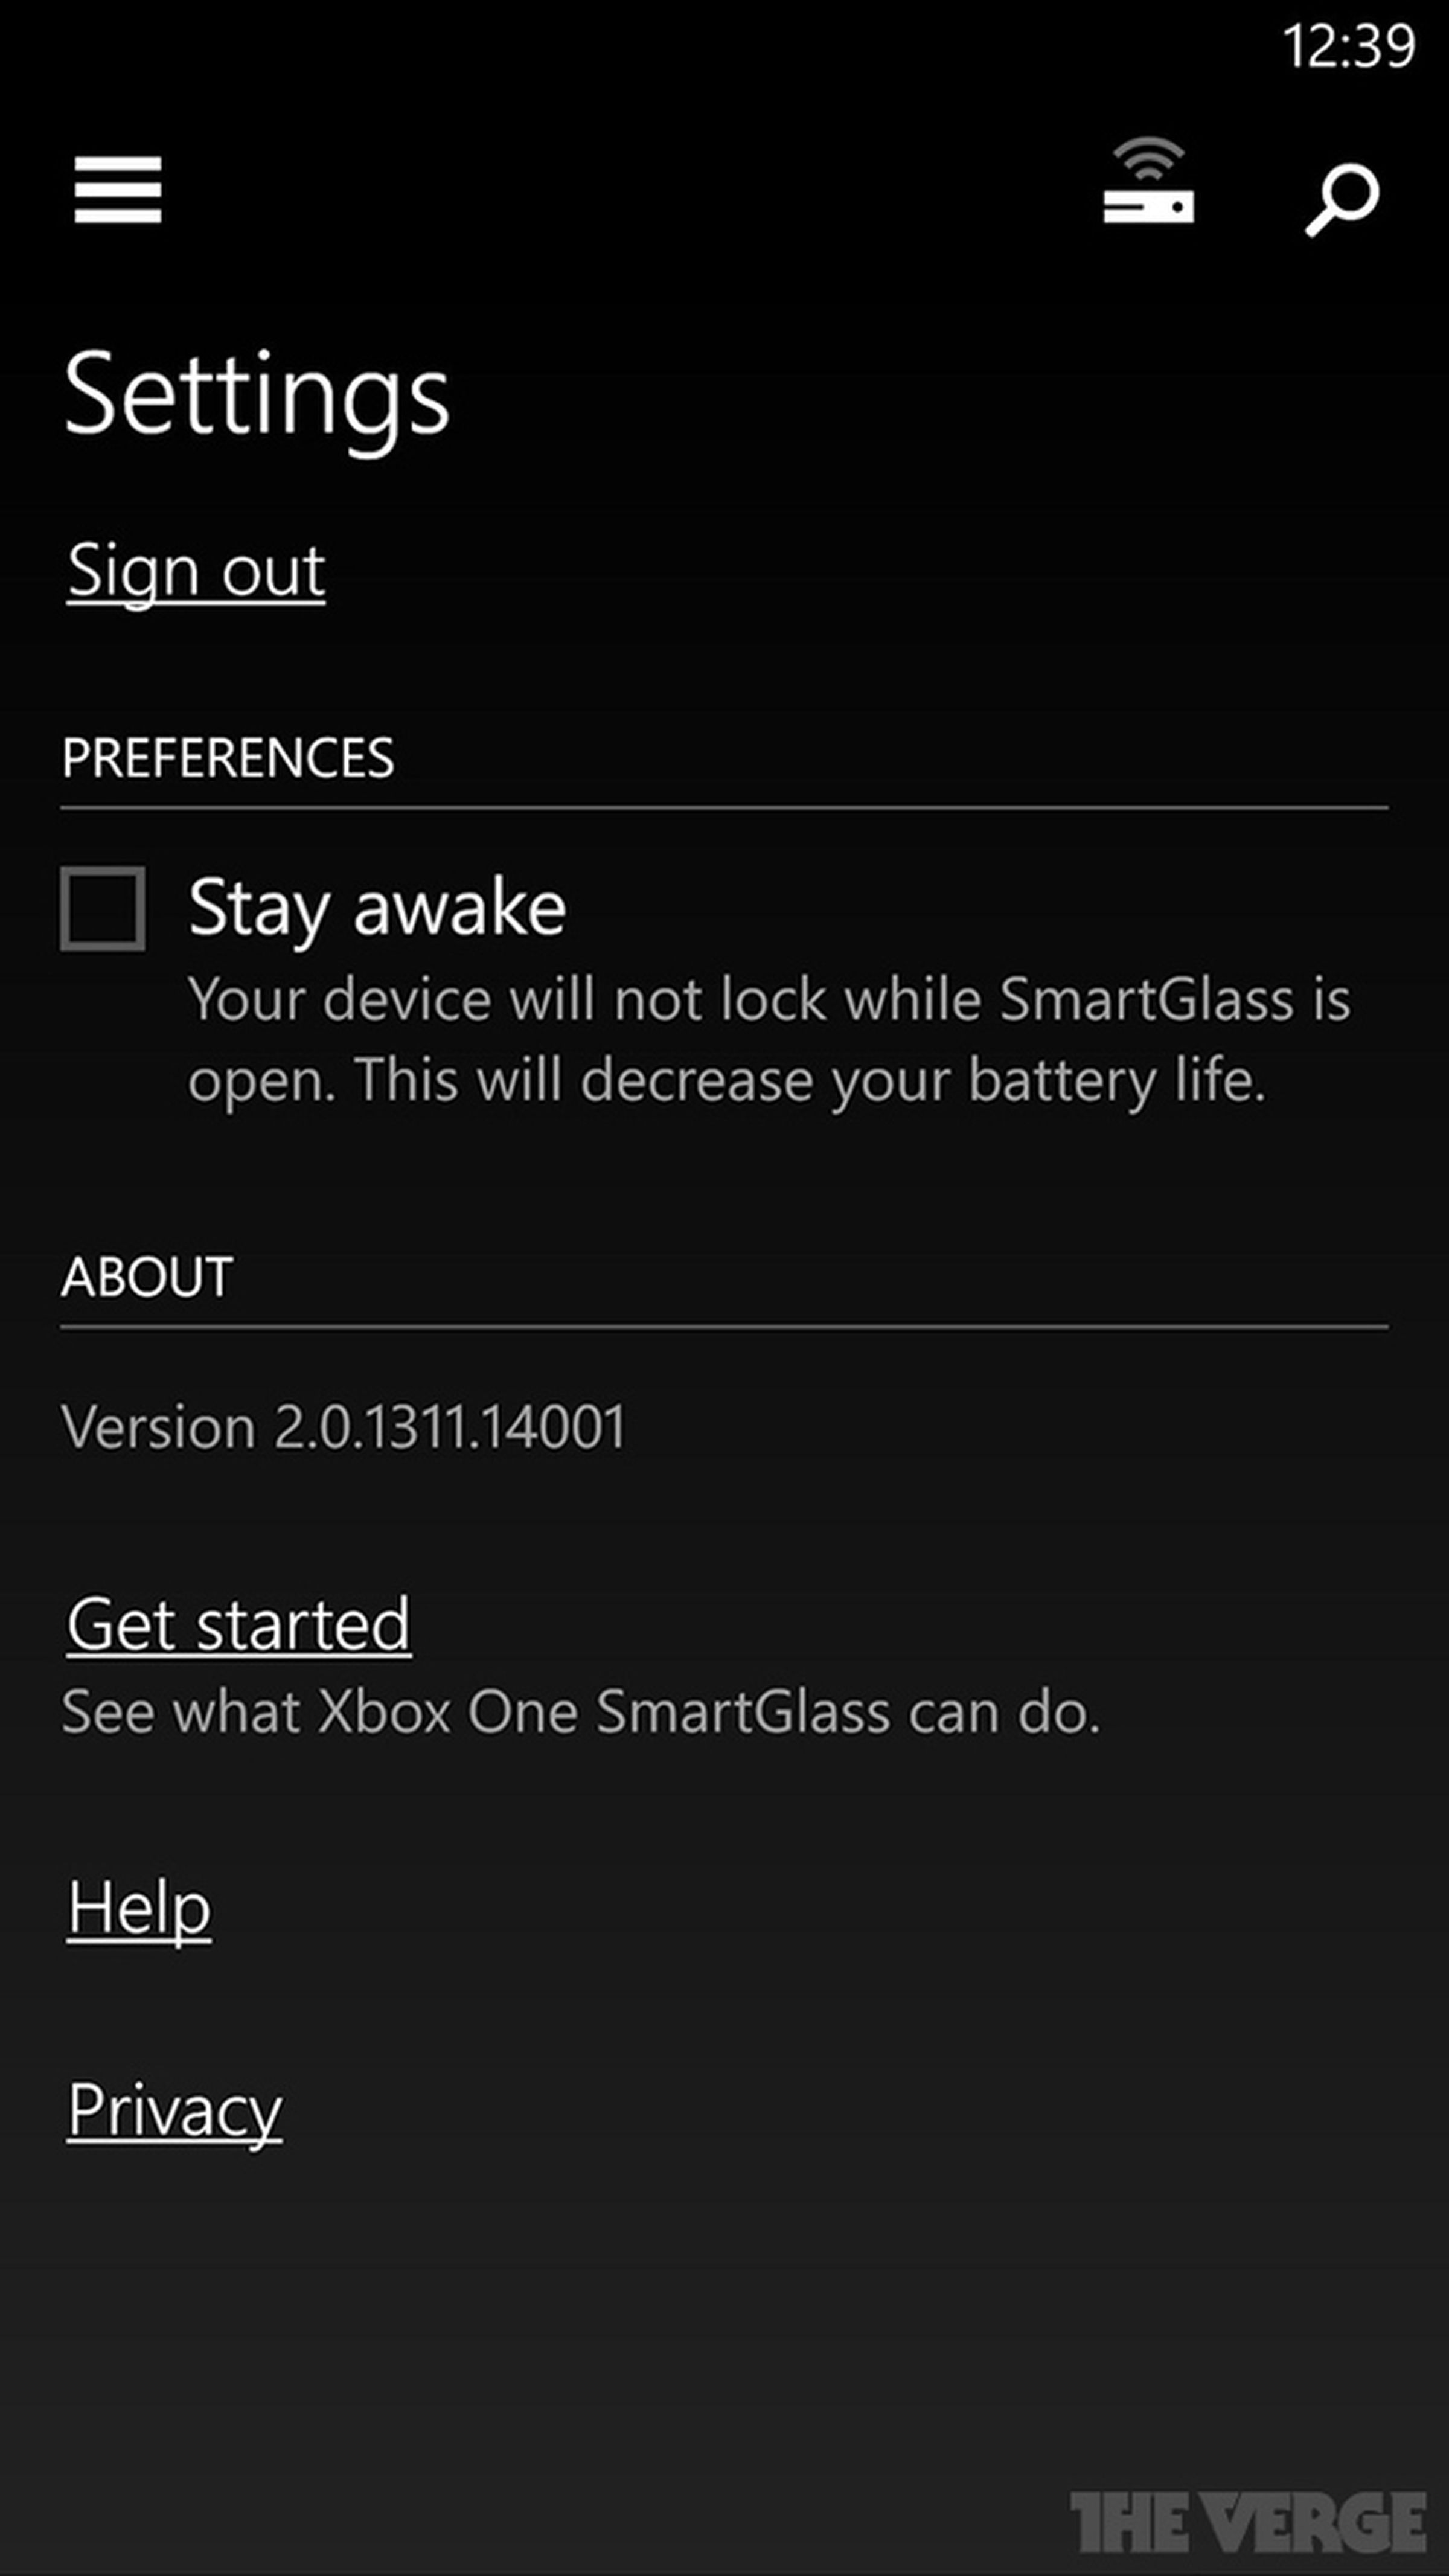 Xbox One SmartGlass screenshots